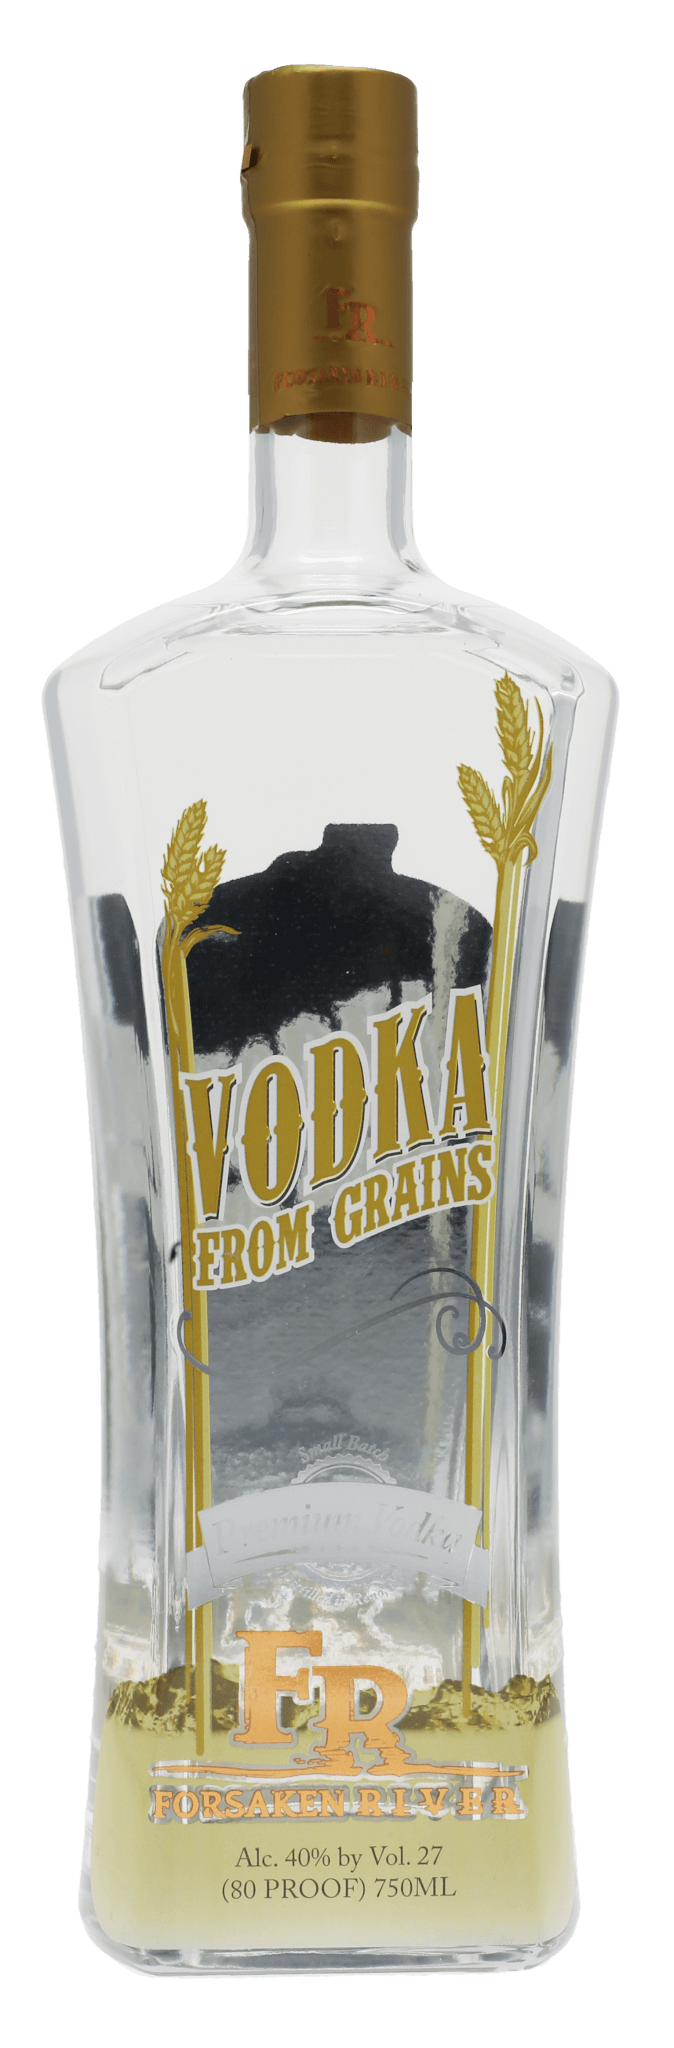 Vodka from Grains